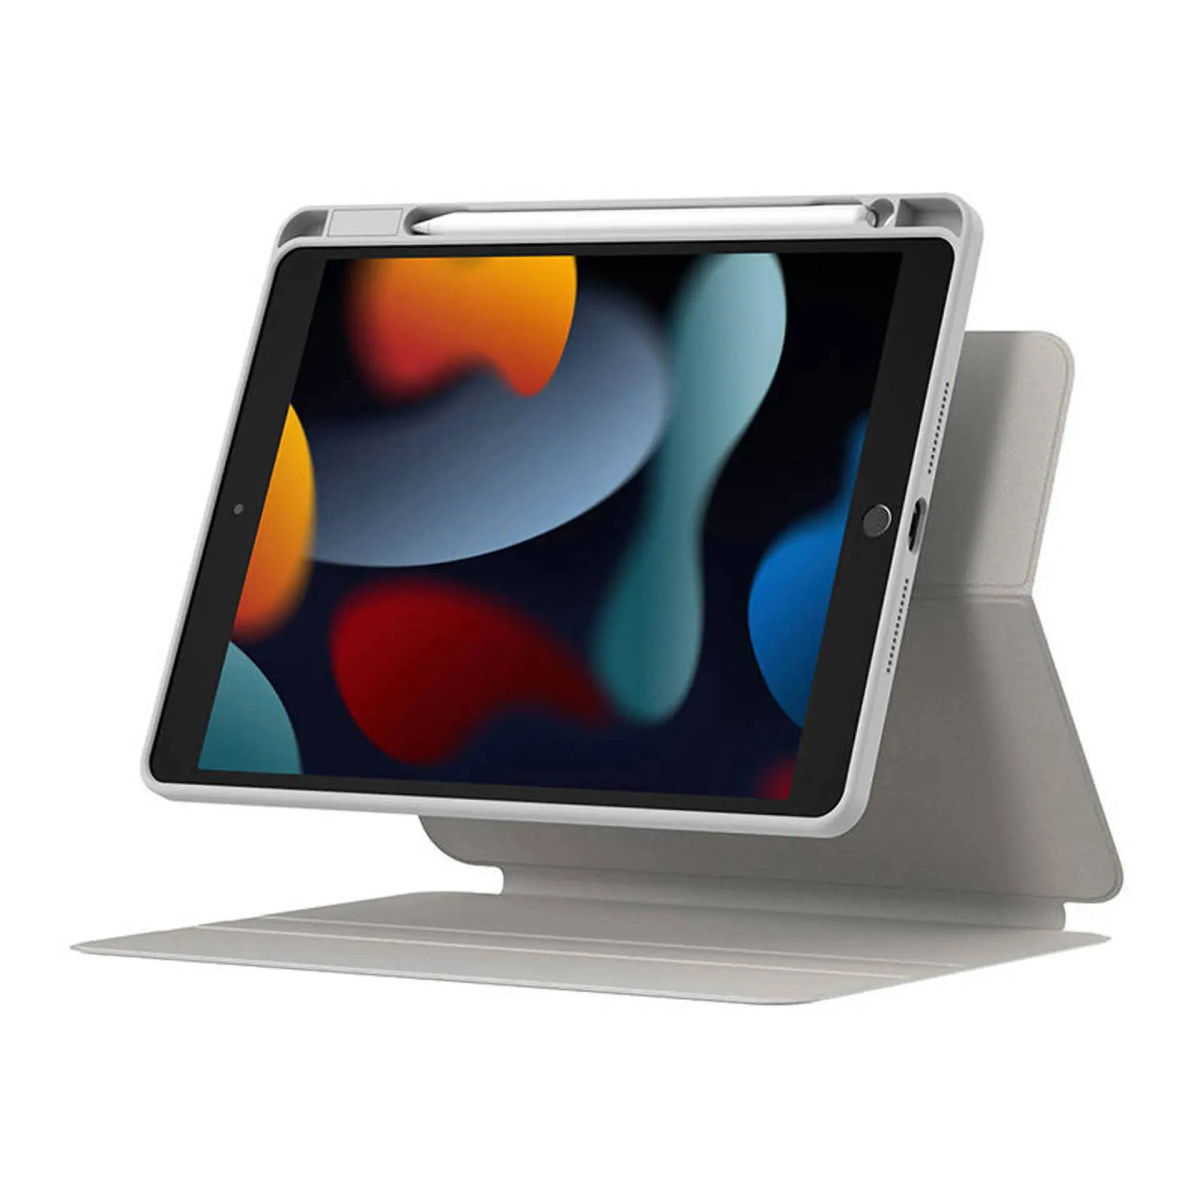 BASEUS 6932172625634 Tablet Grau Holster Kunststoff, Hülle für Apple